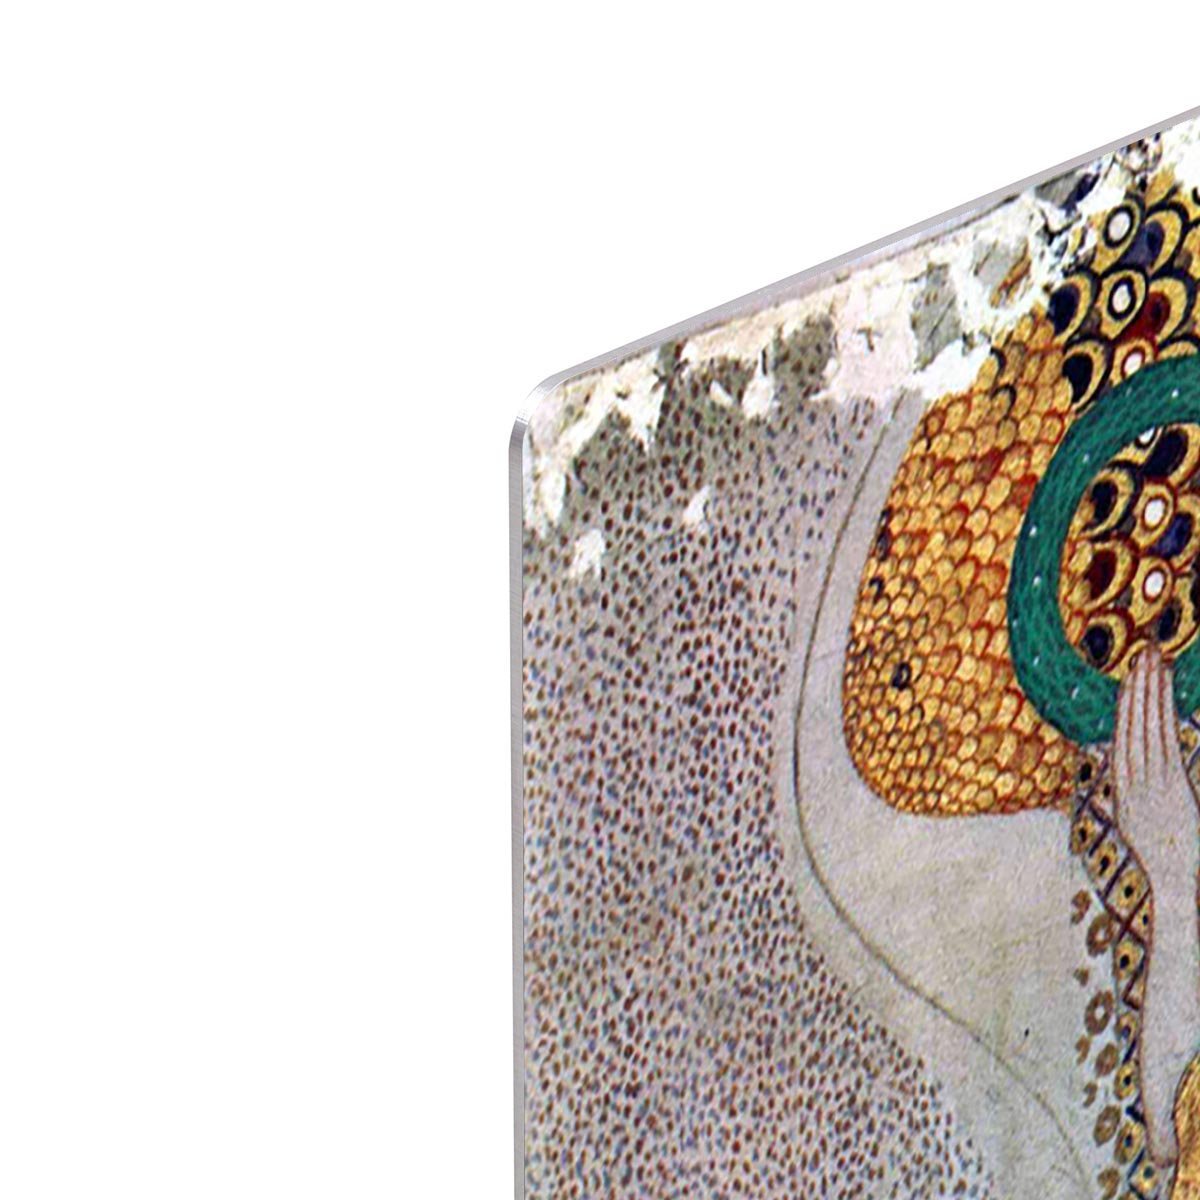 The Beethoven Freize by Klimt HD Metal Print